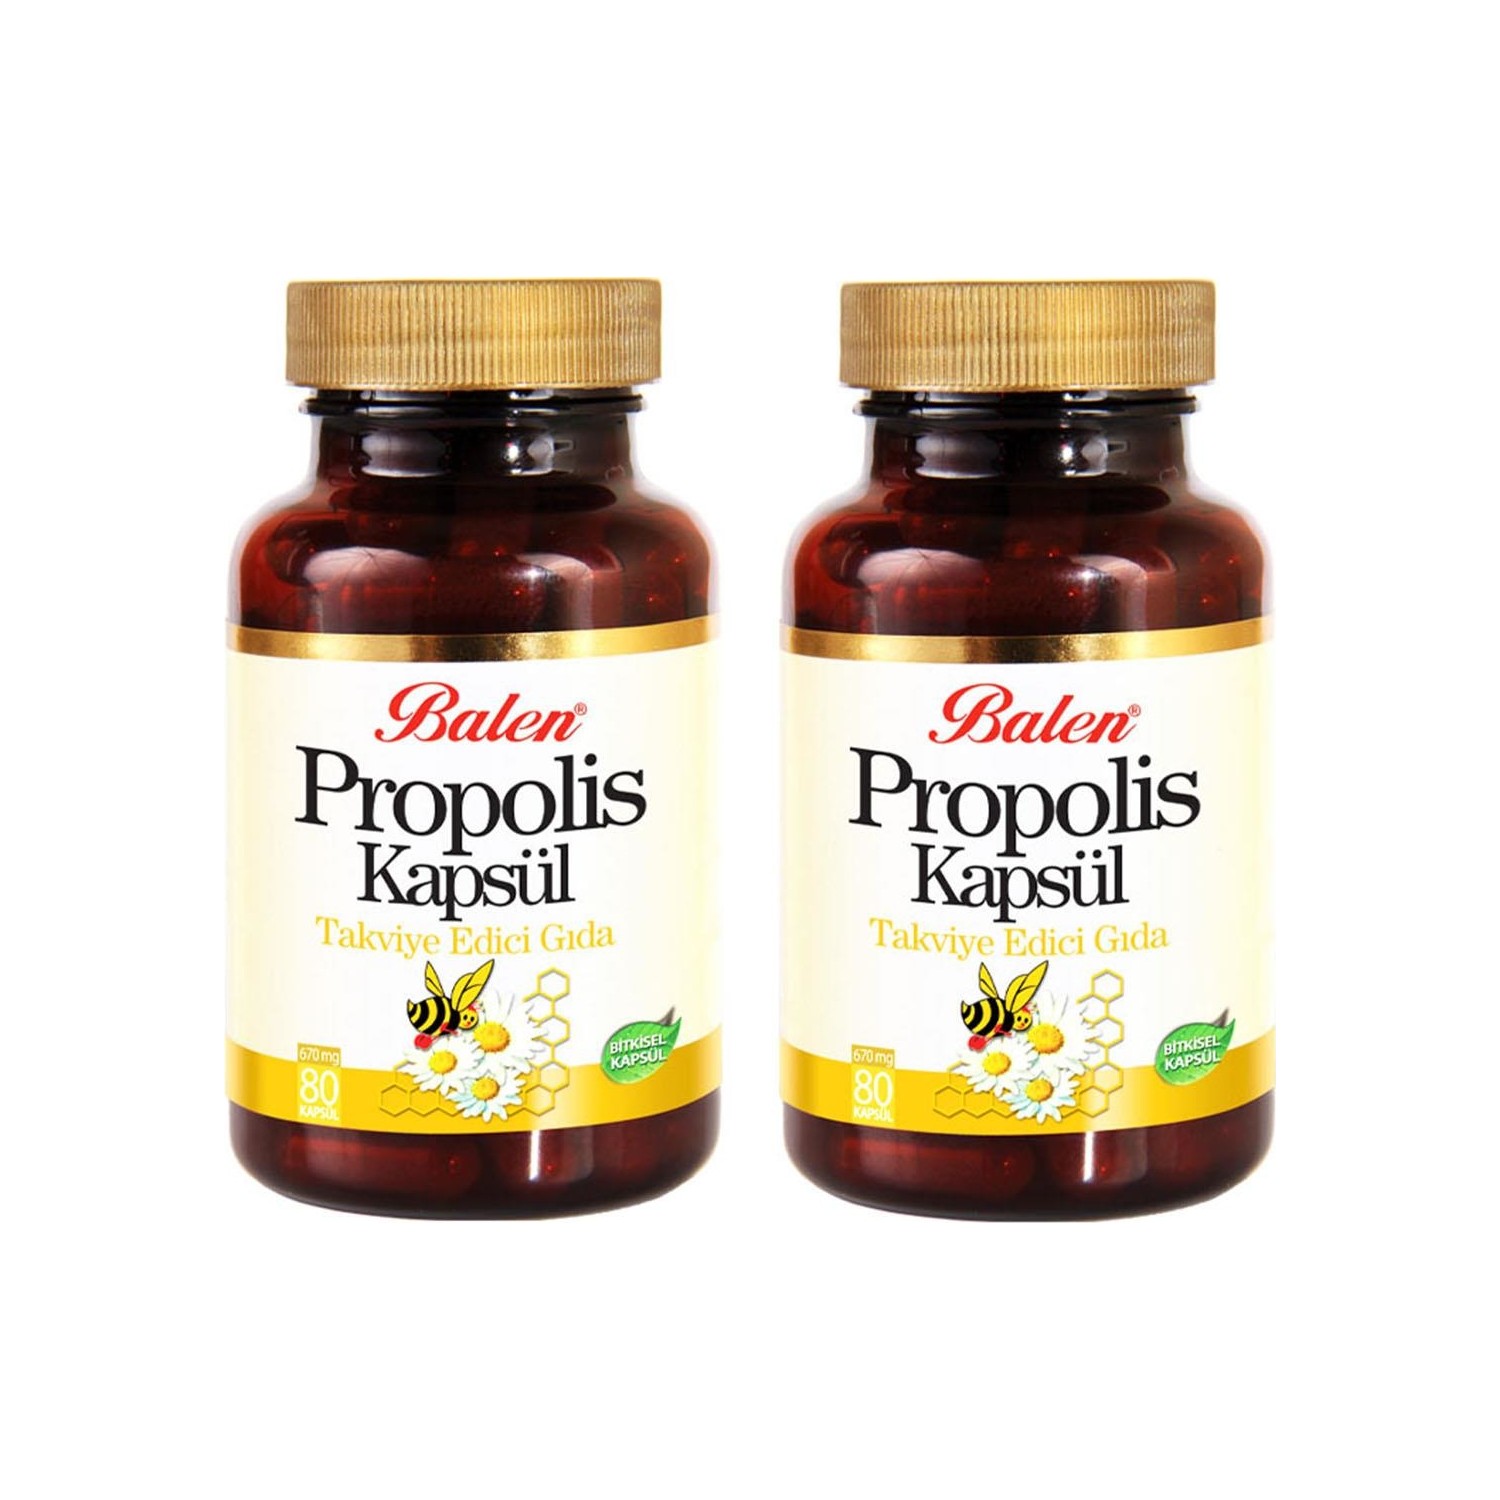 Пищевая добавка Balen Propolis 670 мг, 2 упаковки по 80 таблеток